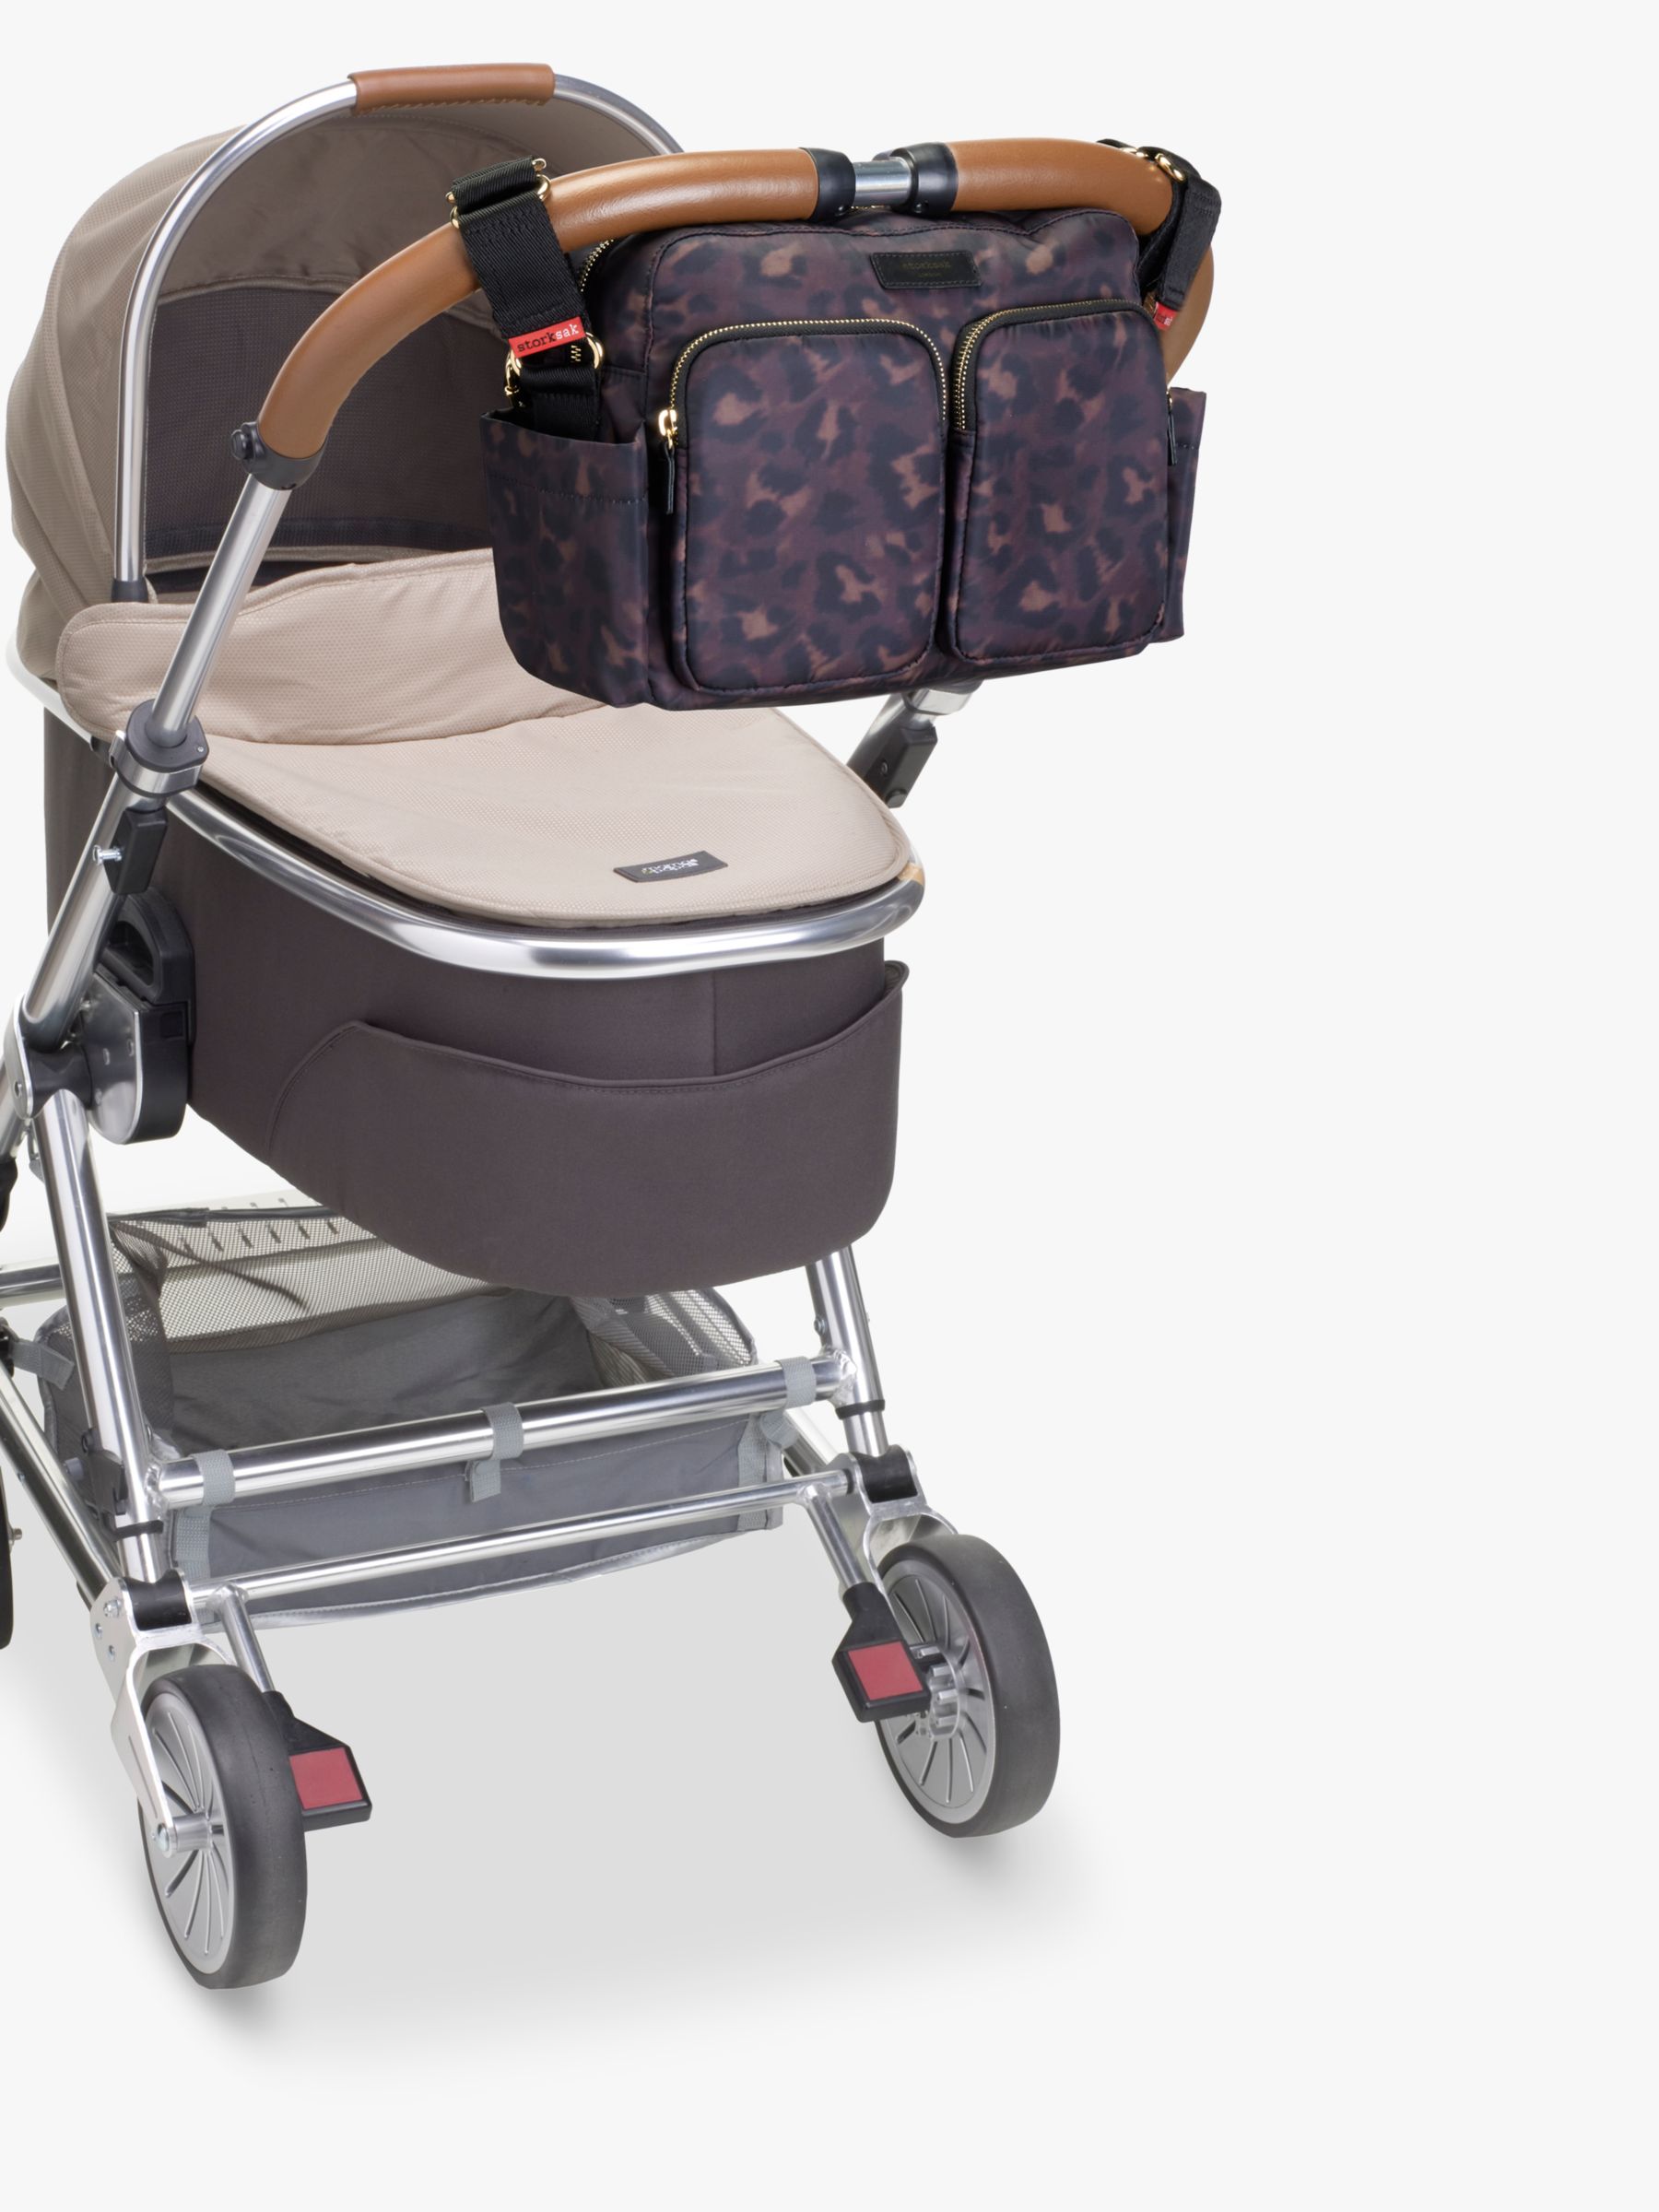 Storksak Caddy Baby Changing Bag